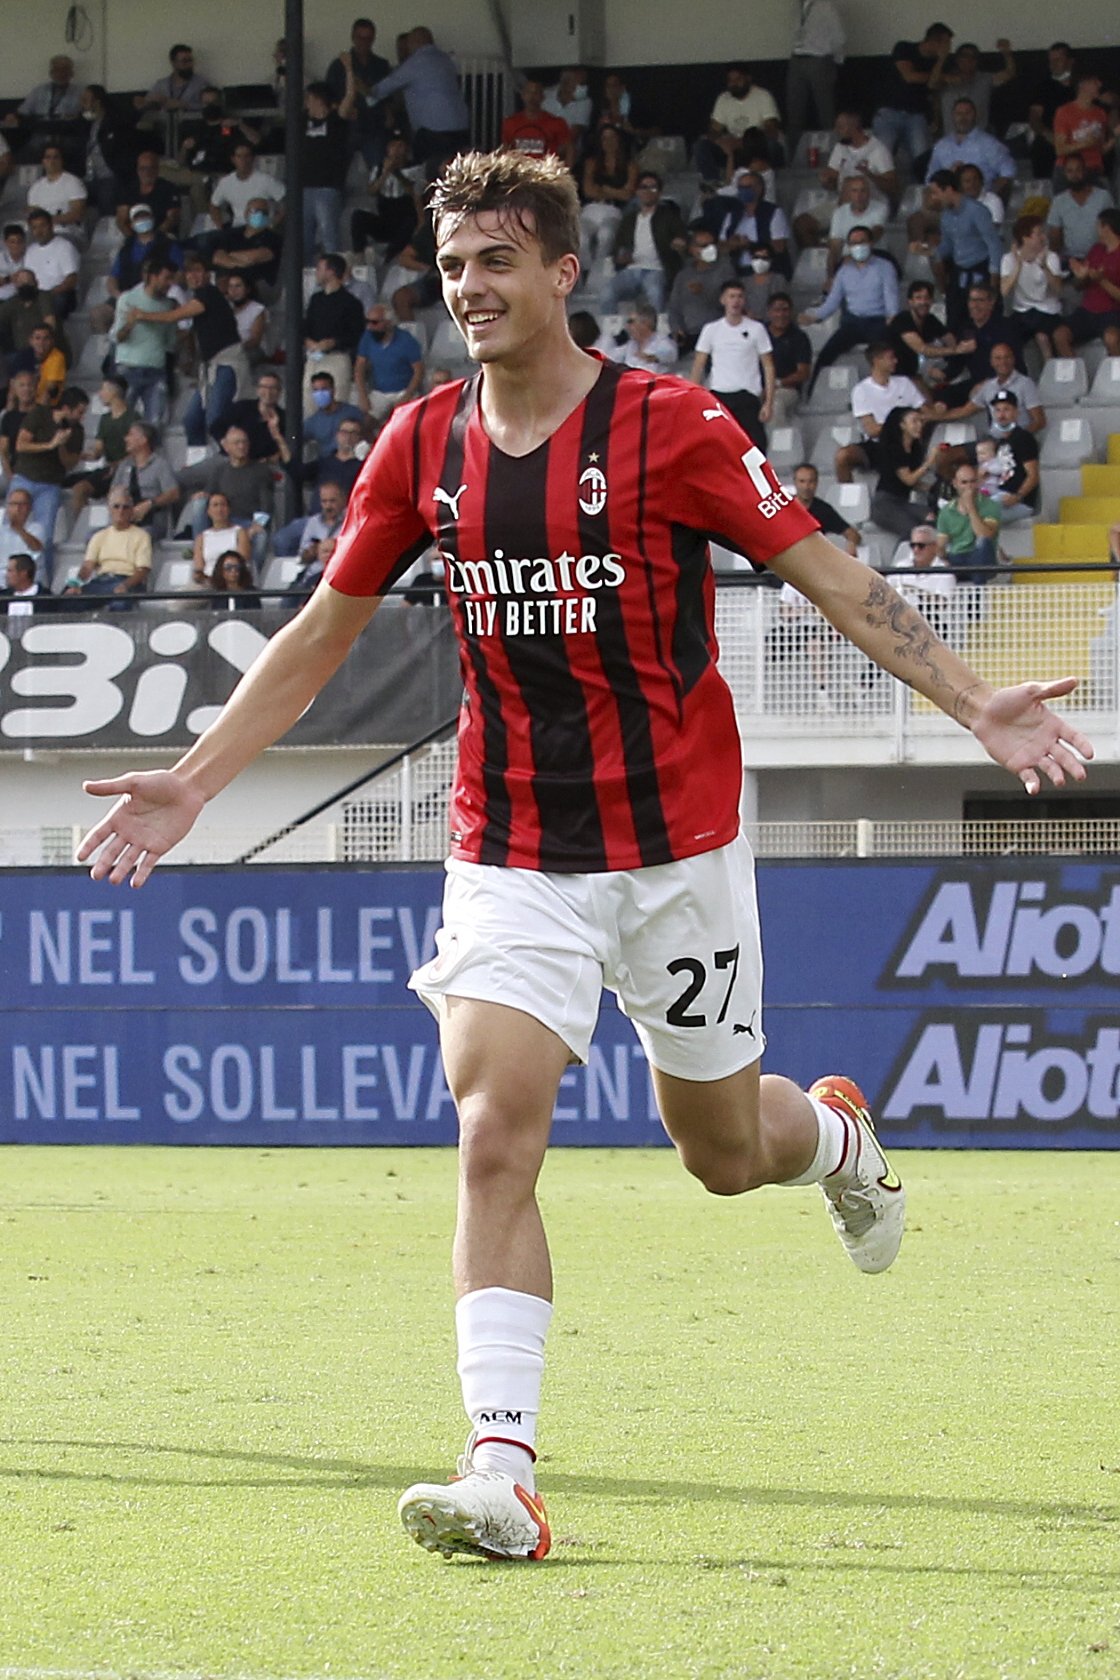 Milan's Daniel Maldini celebrates after scoring his side's first goal during a Serie A match against Spezia at the Alberto Picco stadium in La Spezia, Sept. 25, 2021. (AP Photo)